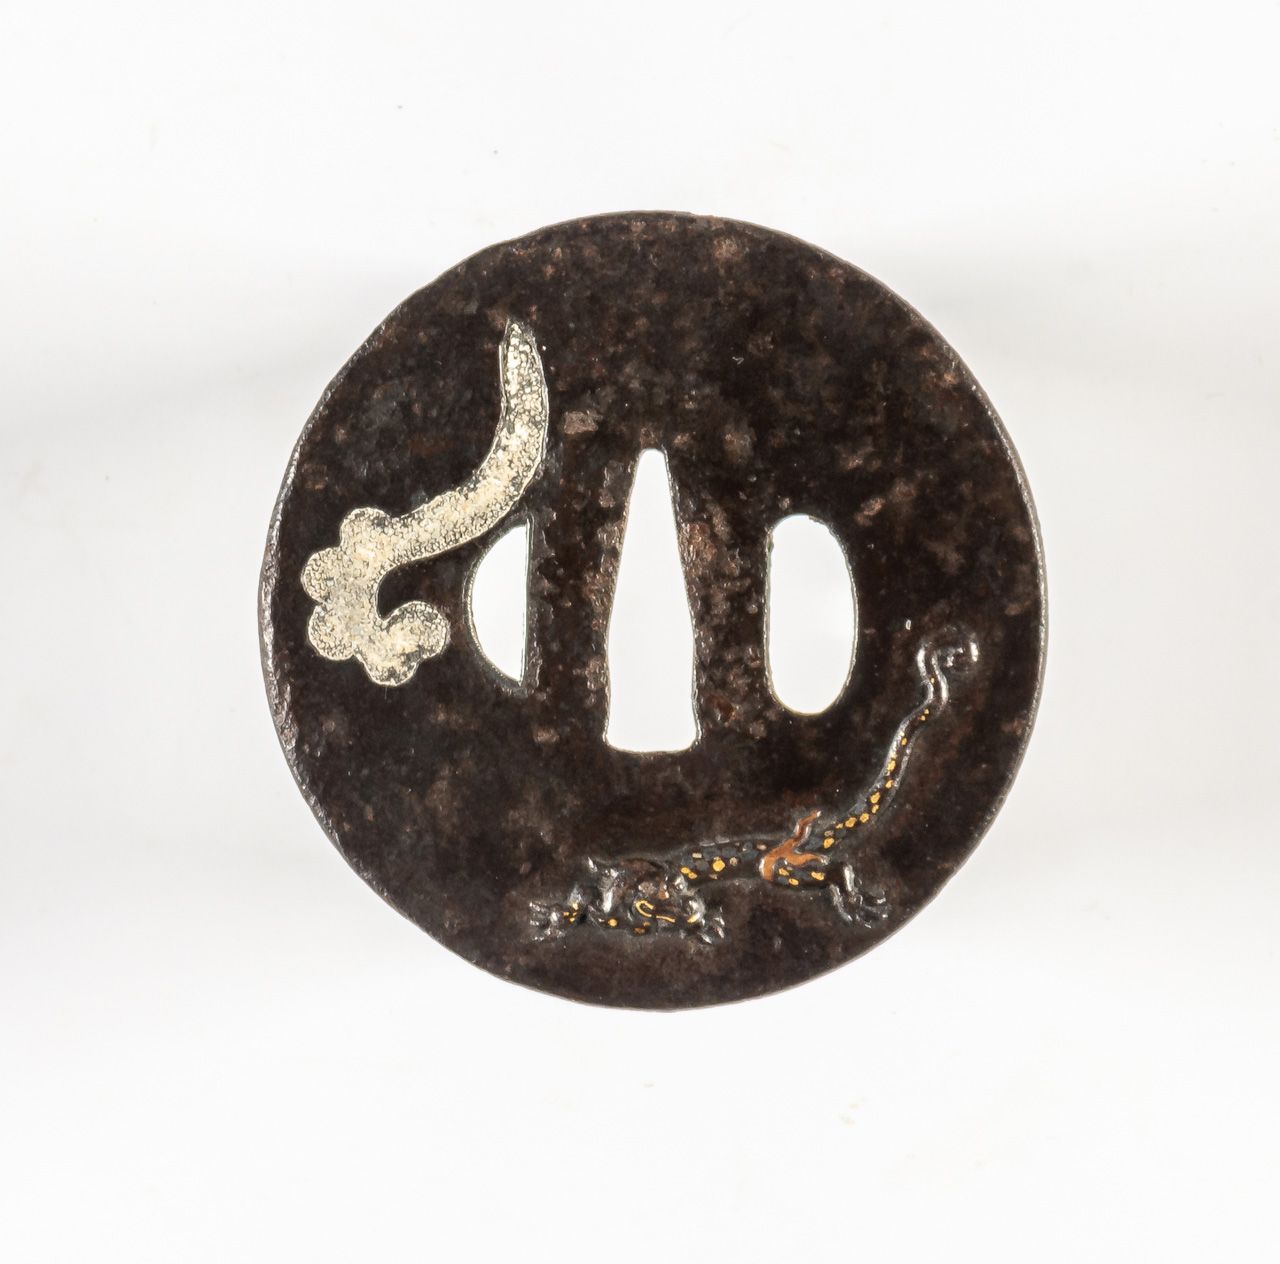 TSUBA MIT DRACHEN Japón, hierro, siglo XVIII/XIX.

Diámetro: 7,4 cm



Procedenc&hellip;